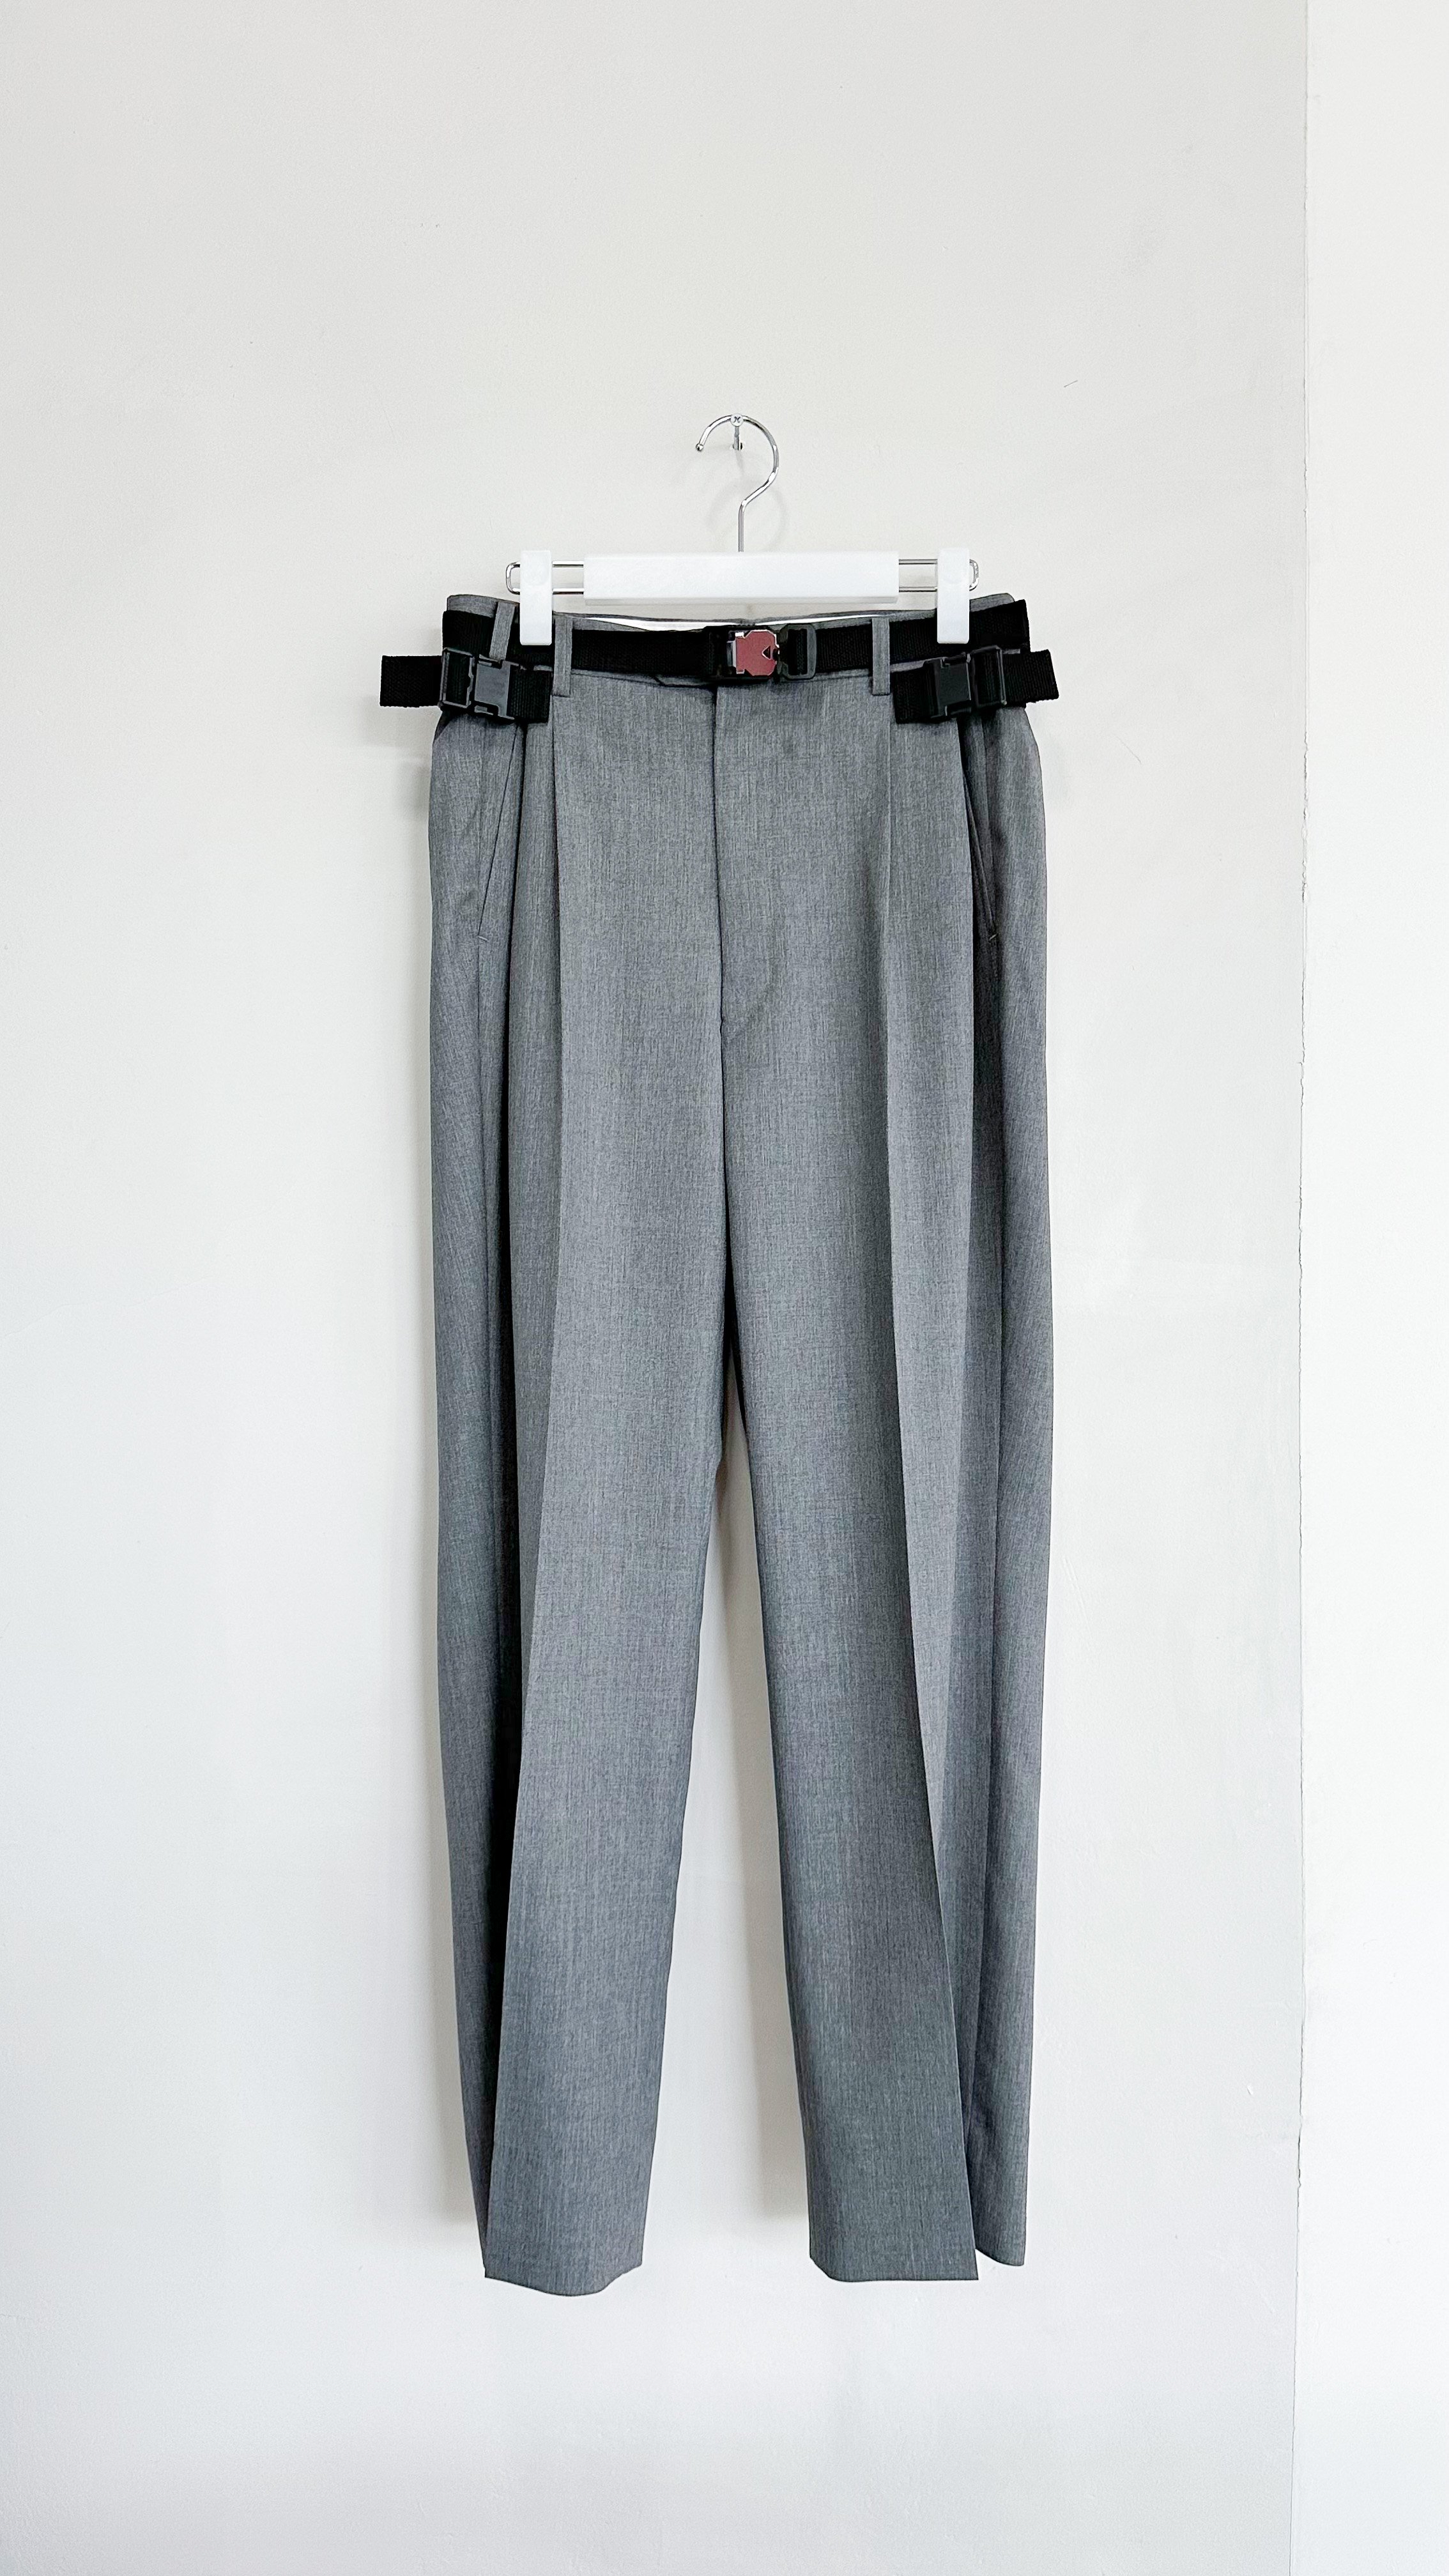 KISHIDAMIKI (キシダミキ) 通販 adjustment trousers - soon 愛媛 松山